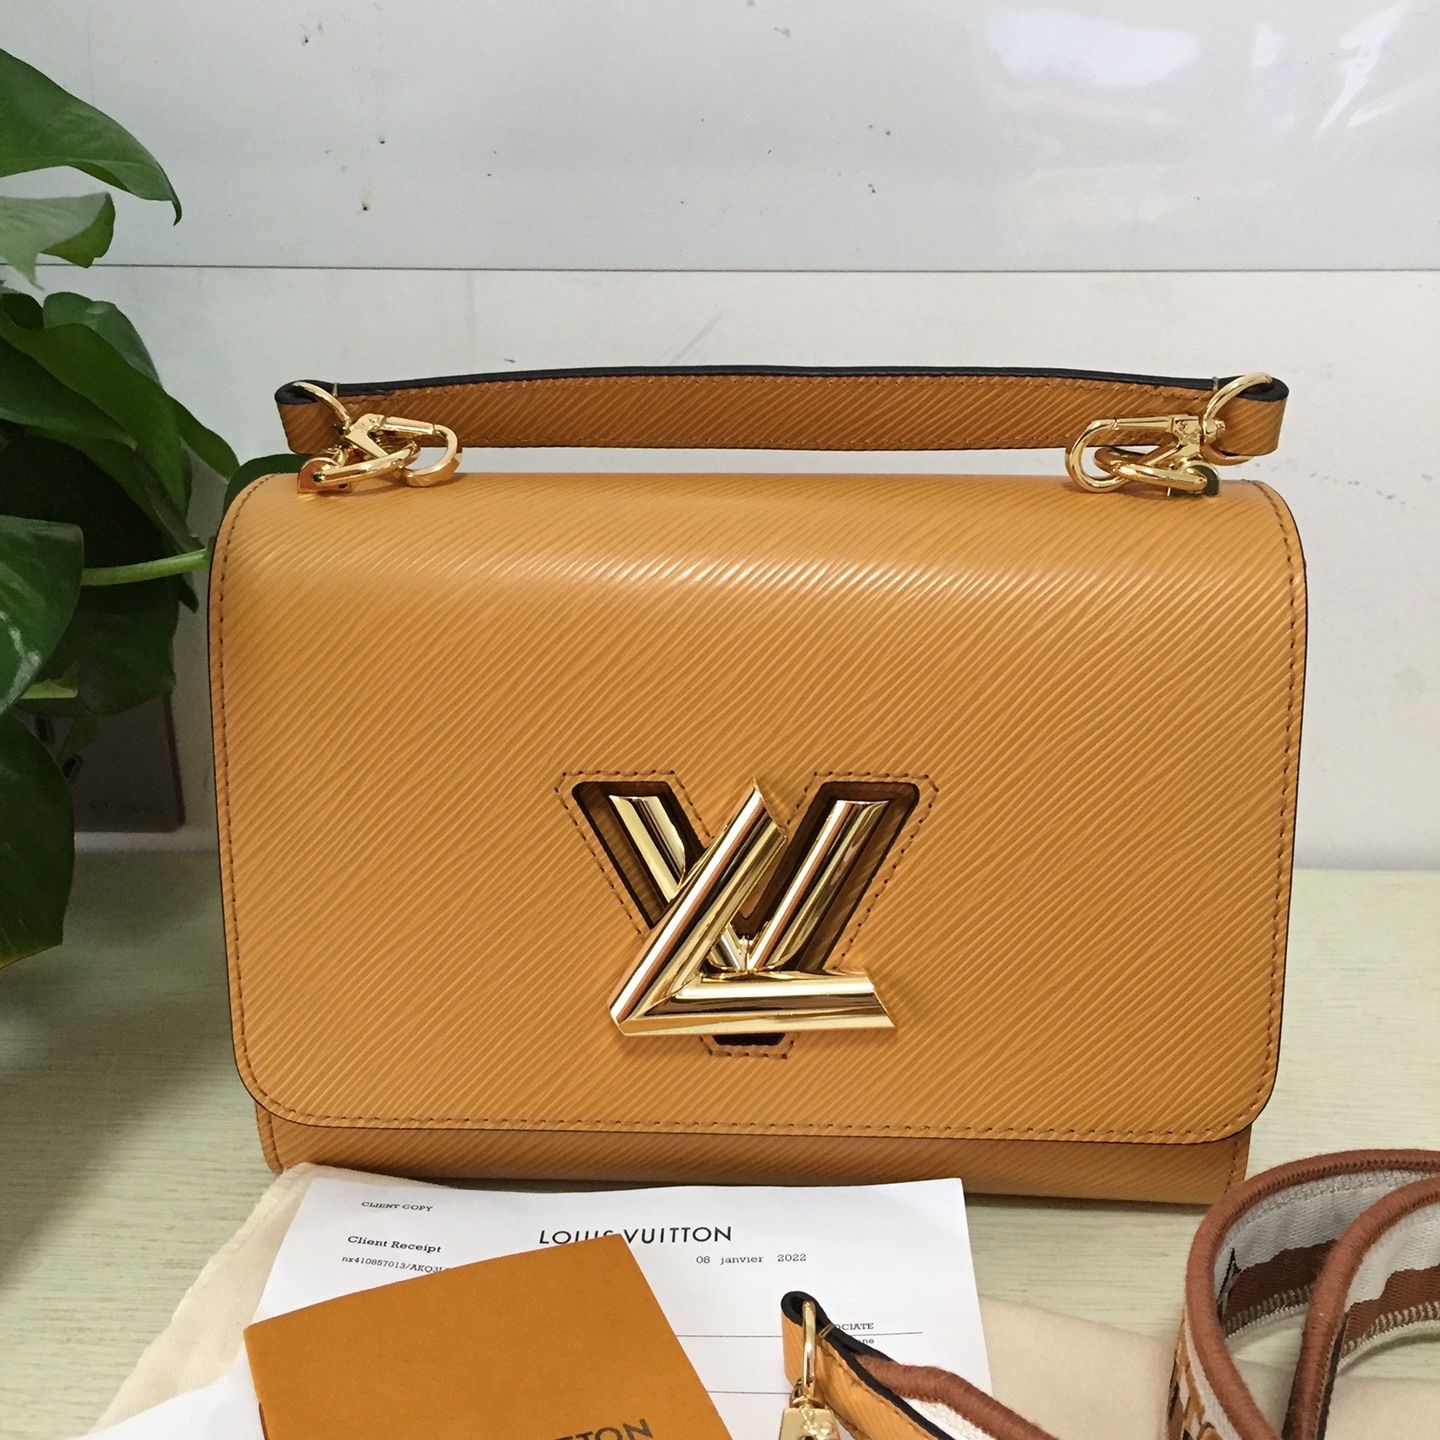 Louis vuitton orange leather open box shoulder bag for Sale in